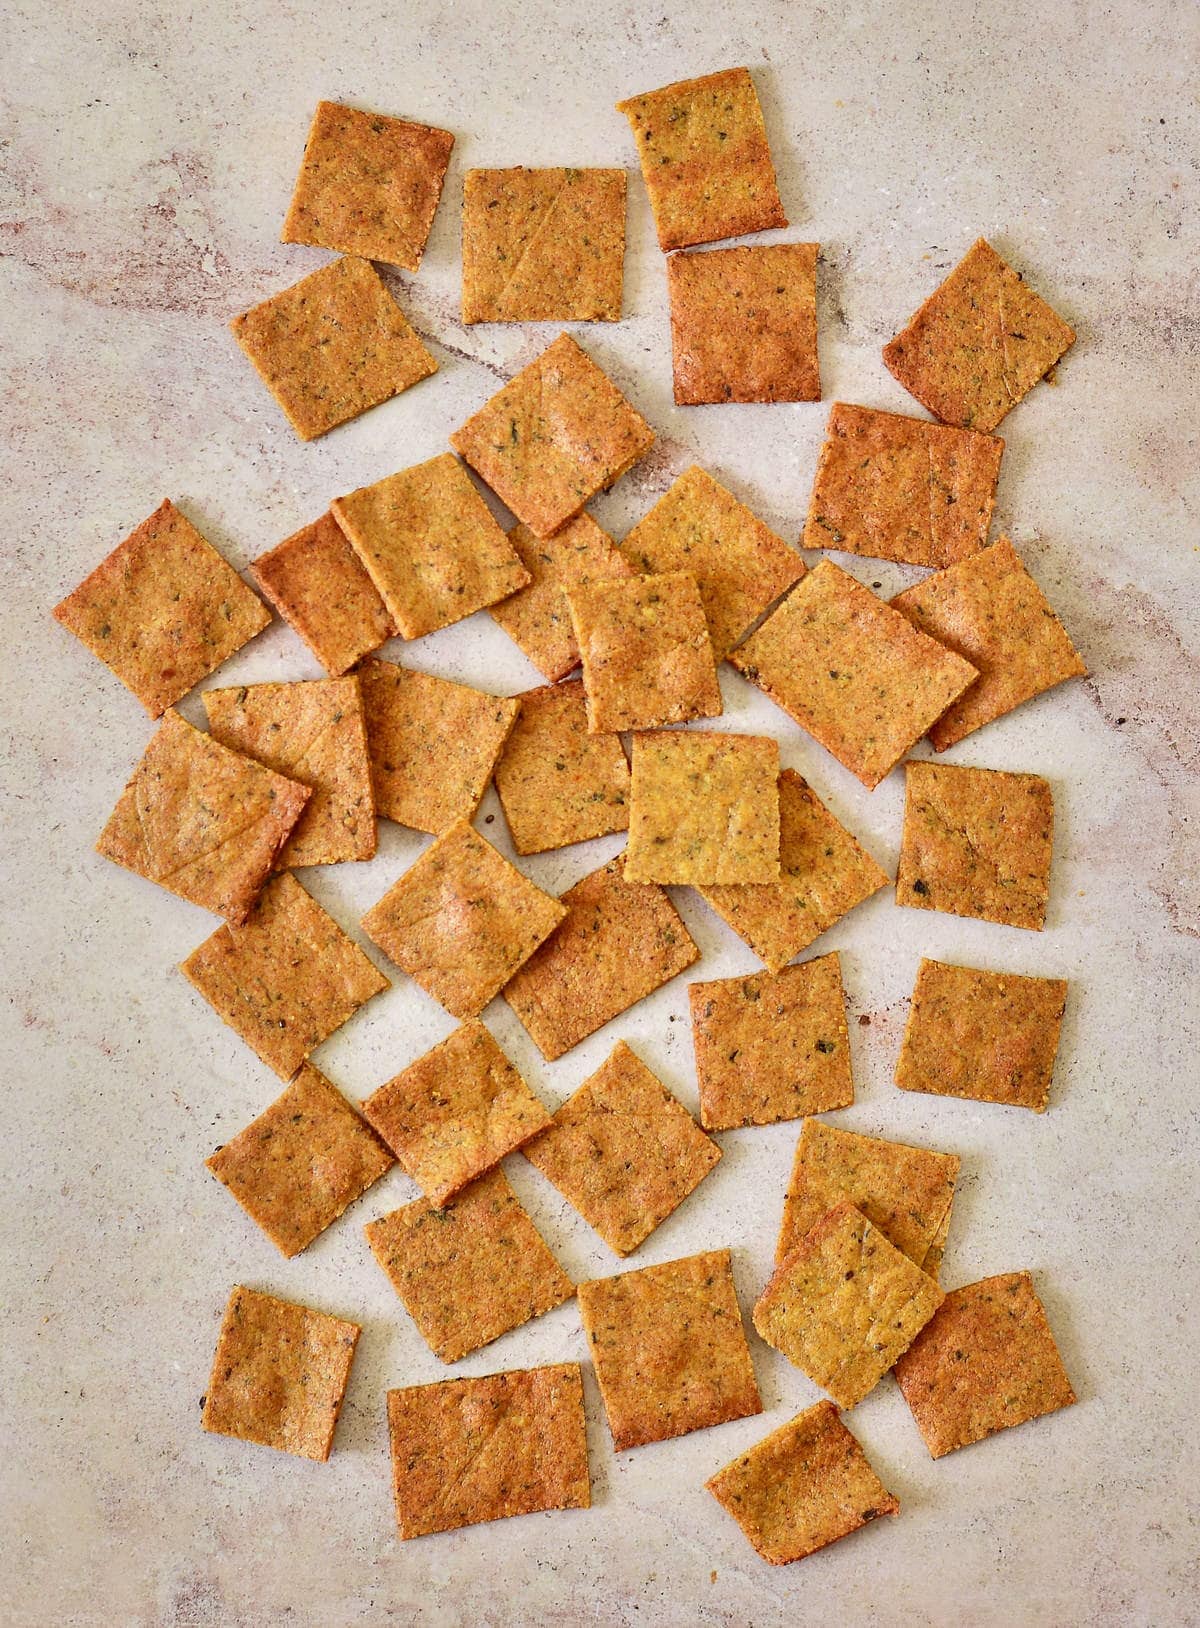 lots of homemade gluten-free keto crackers